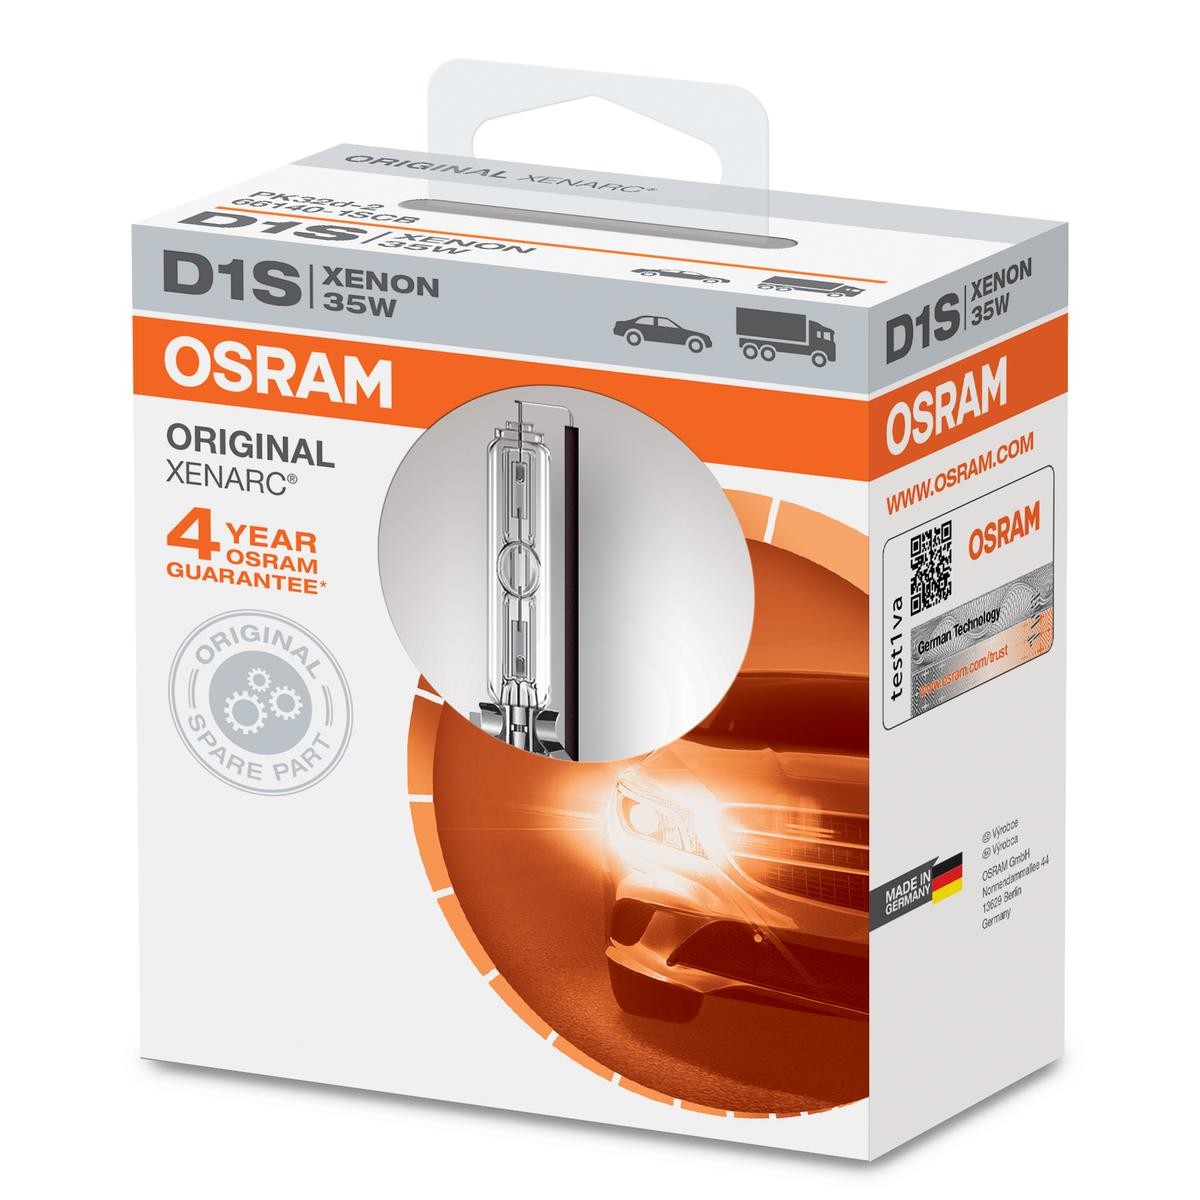 OSRAM 66140 OPEL Autolampen D1S 85V 35W4300K Xenon